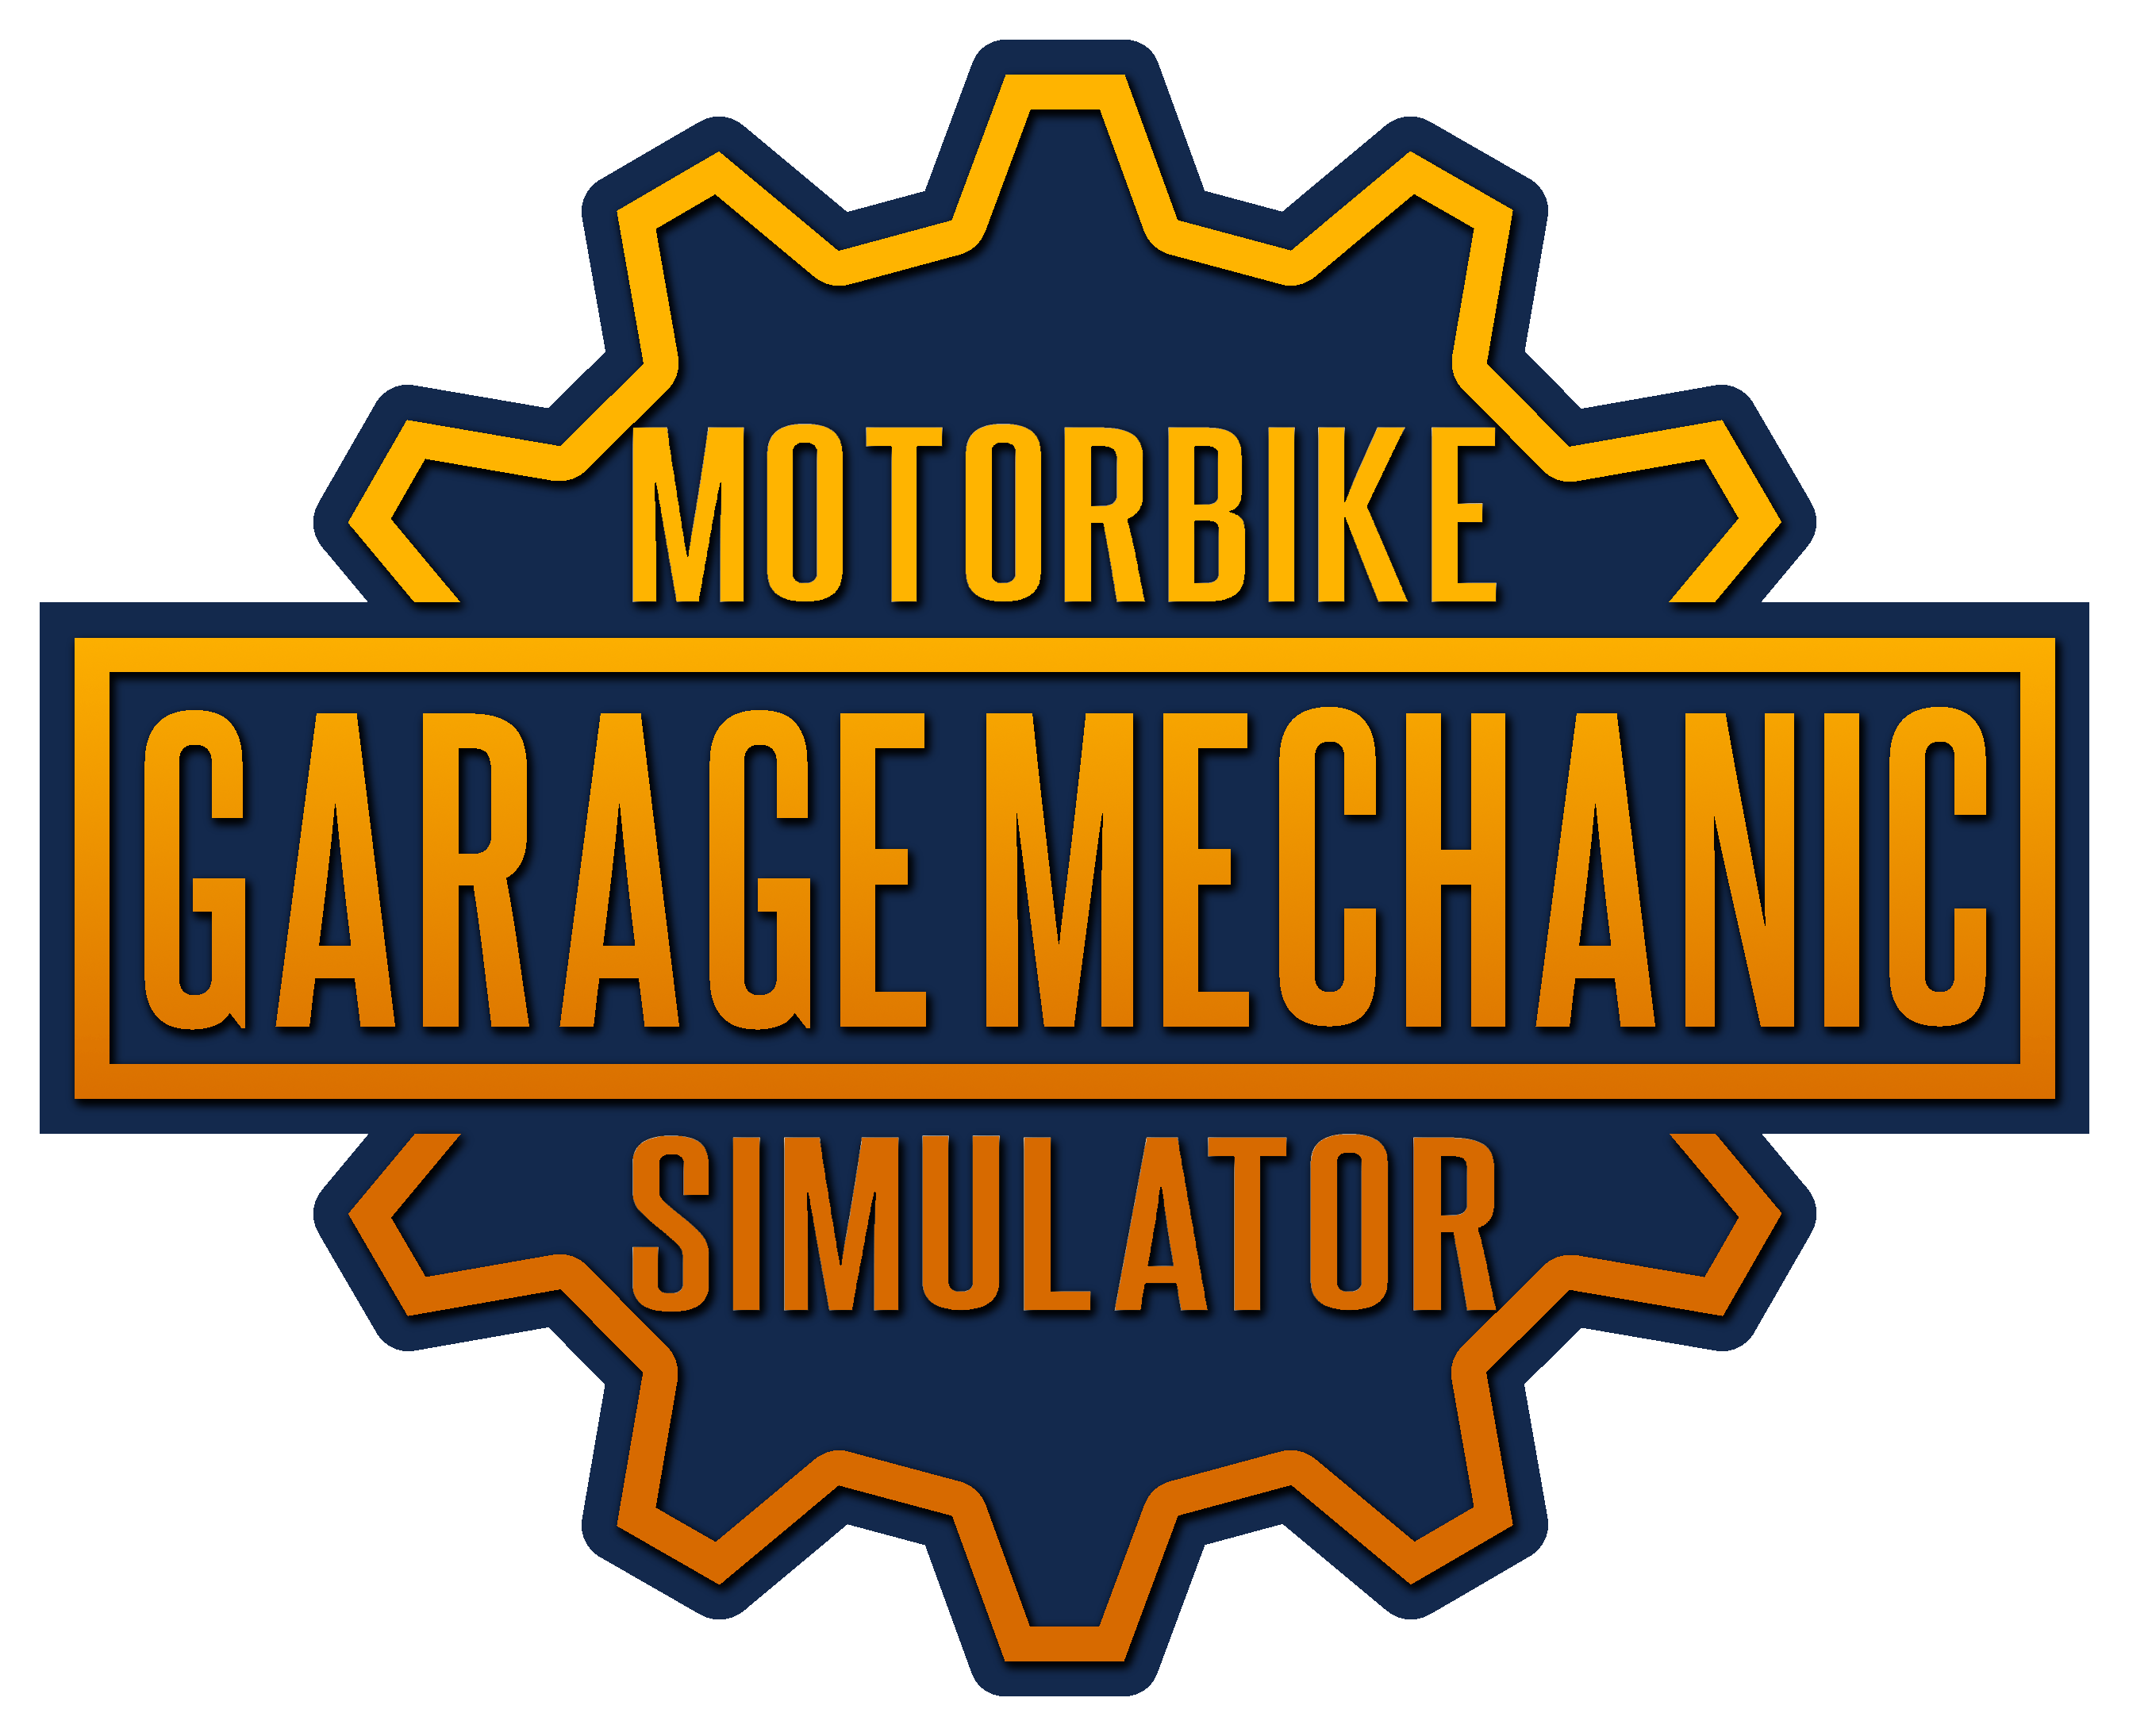 Motorcycle Mechanic Logo - Motorbike Garage Mechanic Simulator :: You may kiss your ride